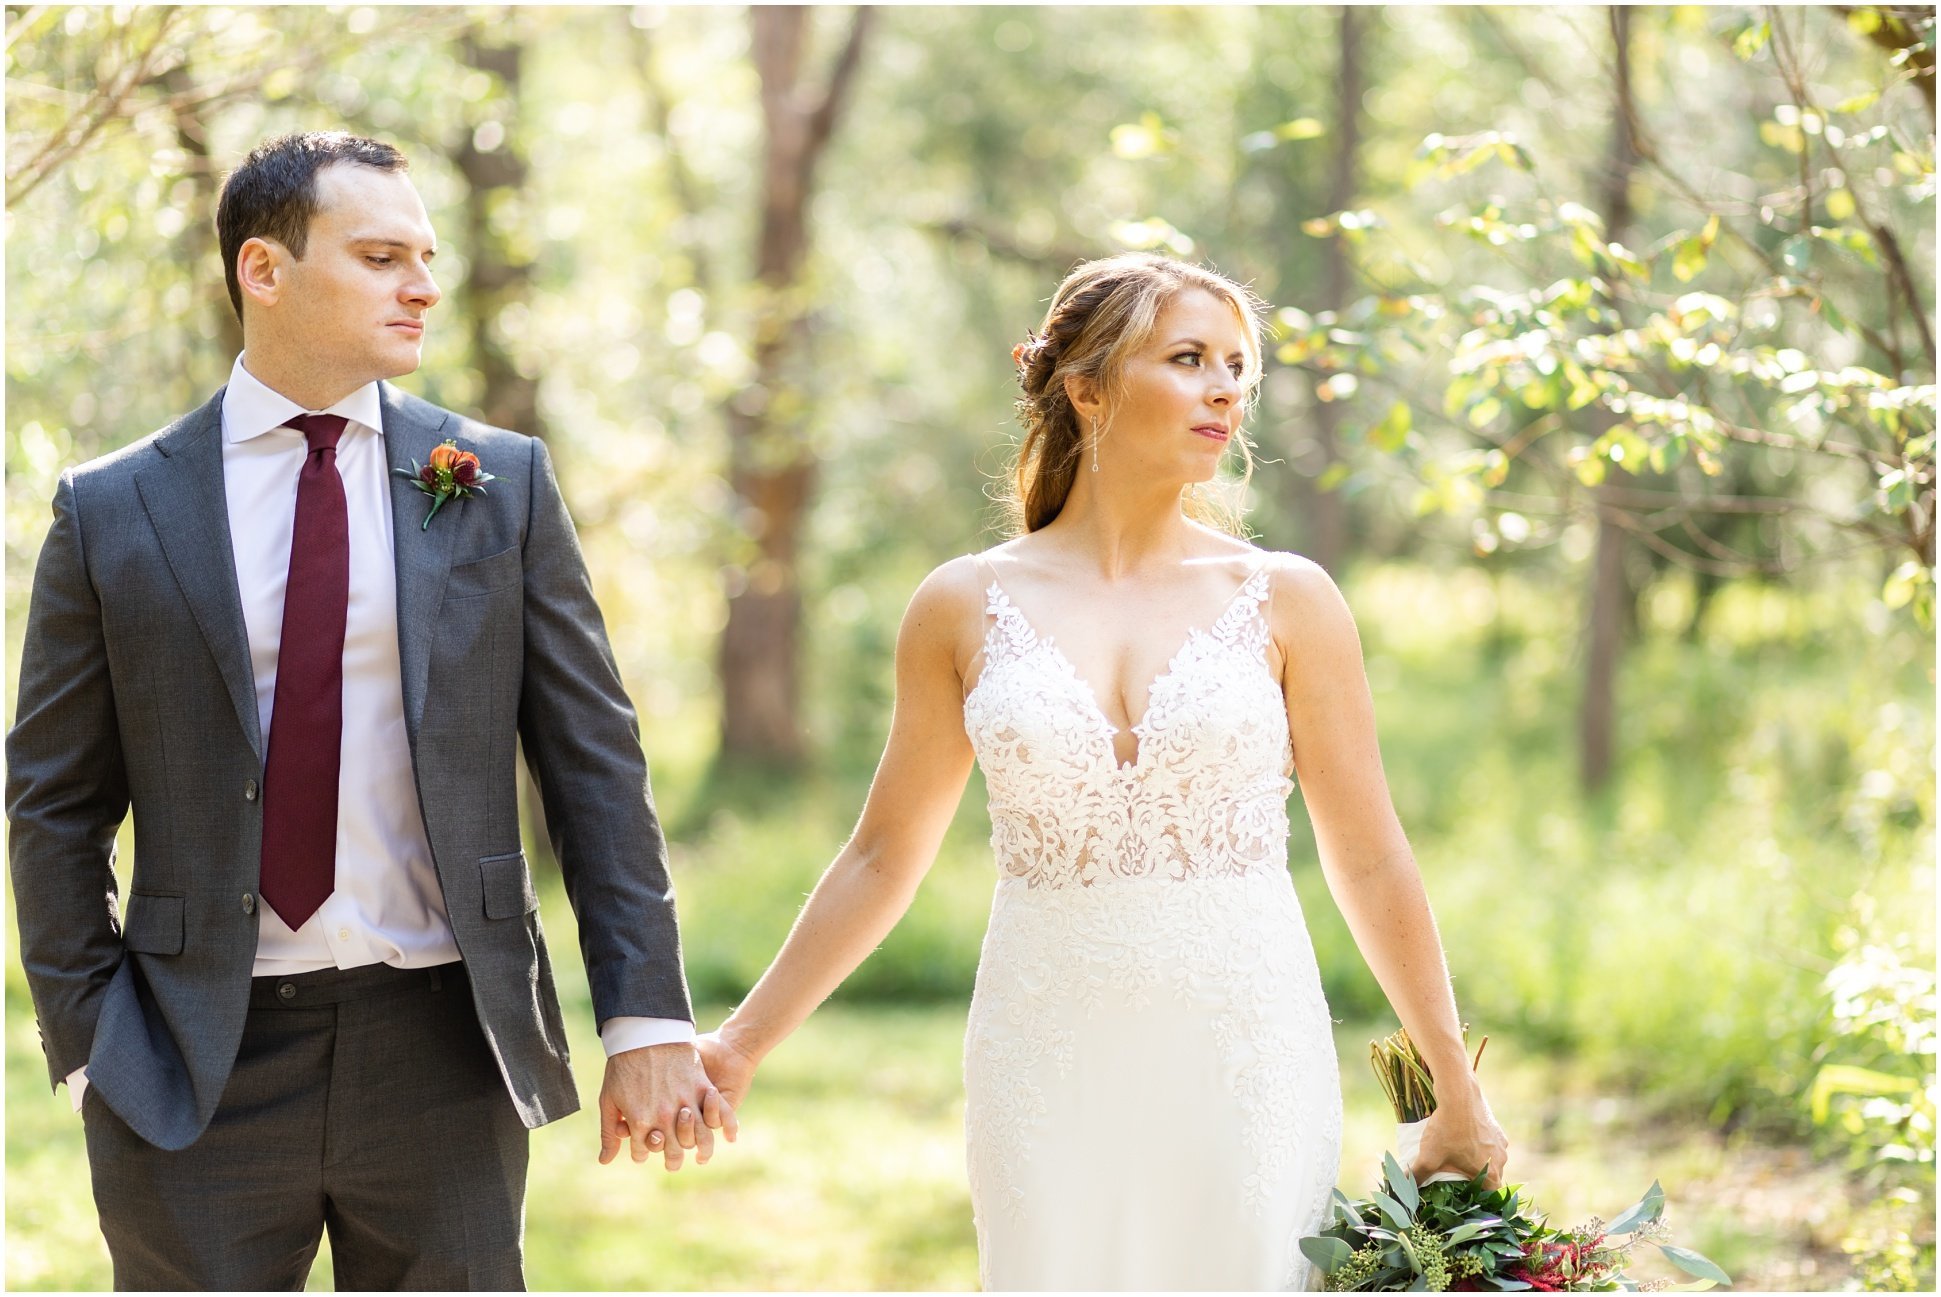 Steph and Cole Fall Wedding at Winding Creek Farm, VA_0116